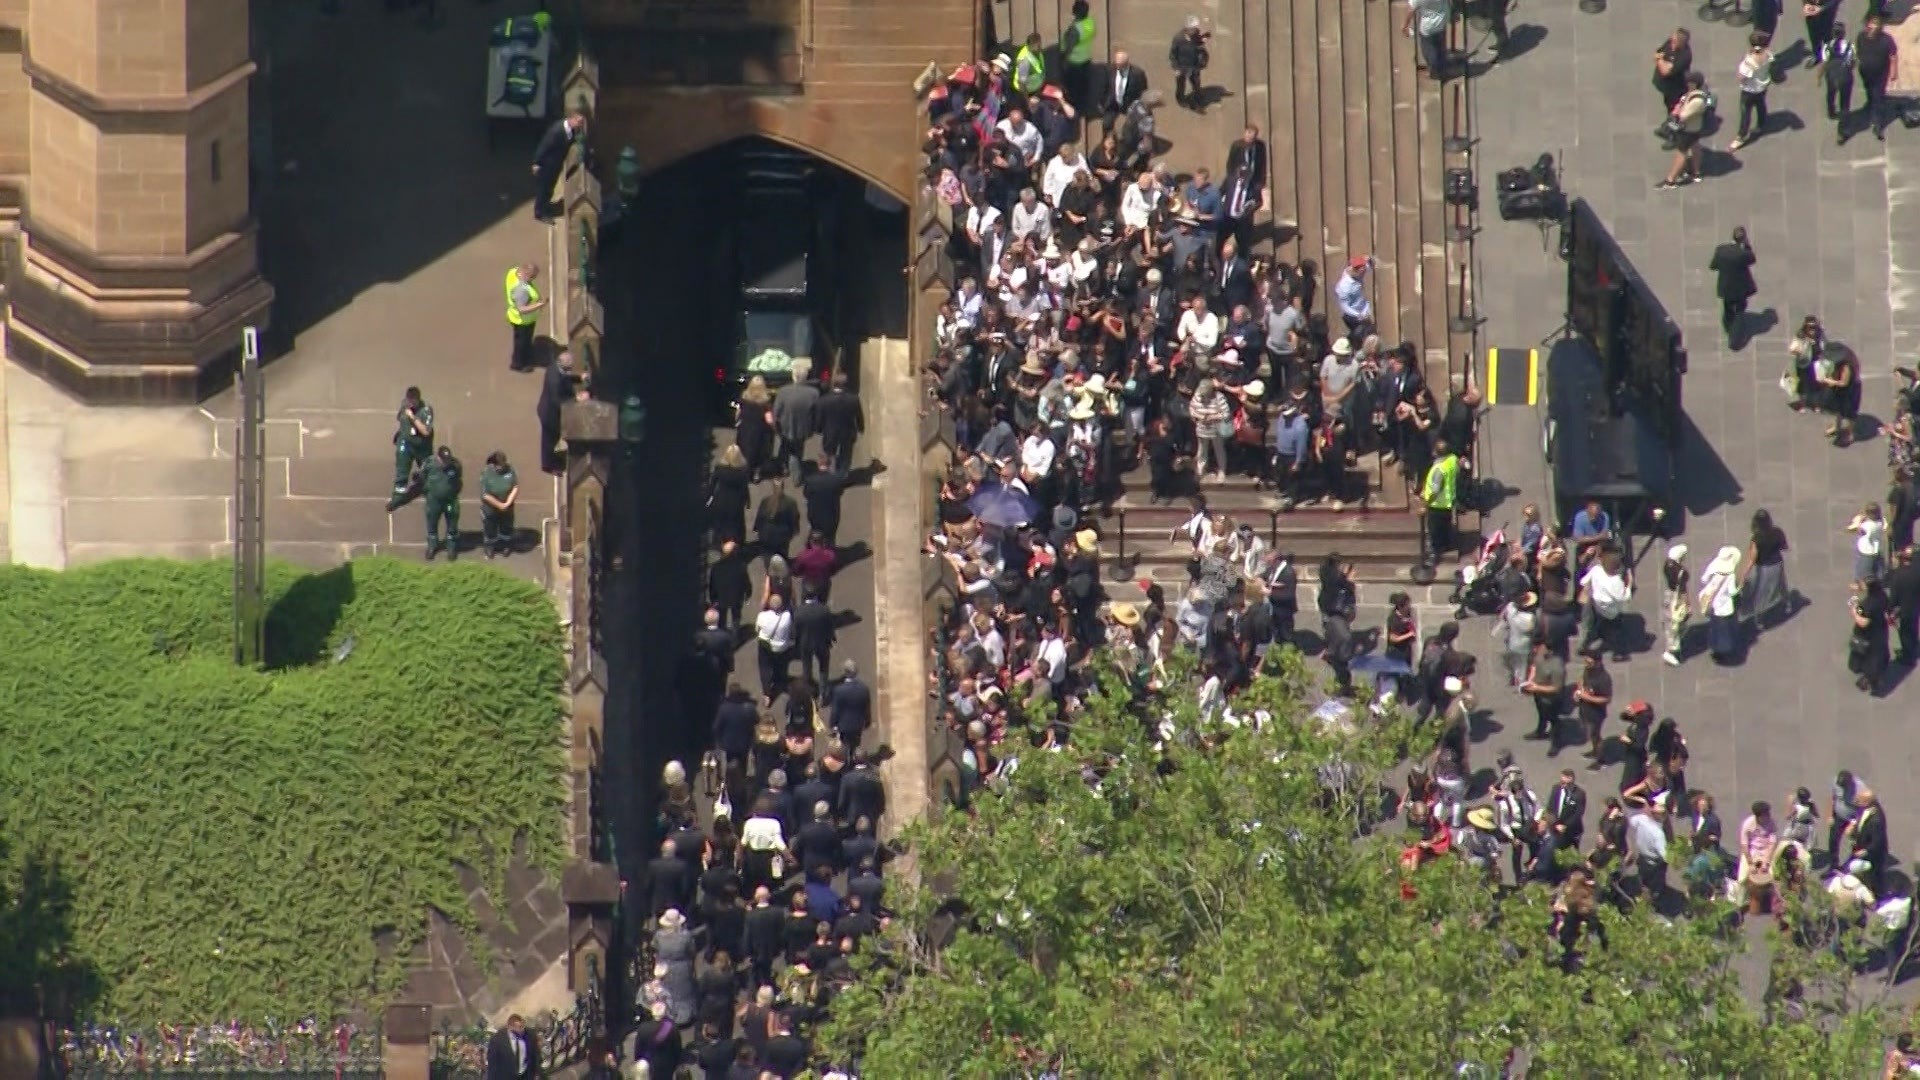 Aerial view of people walking behind a hearse